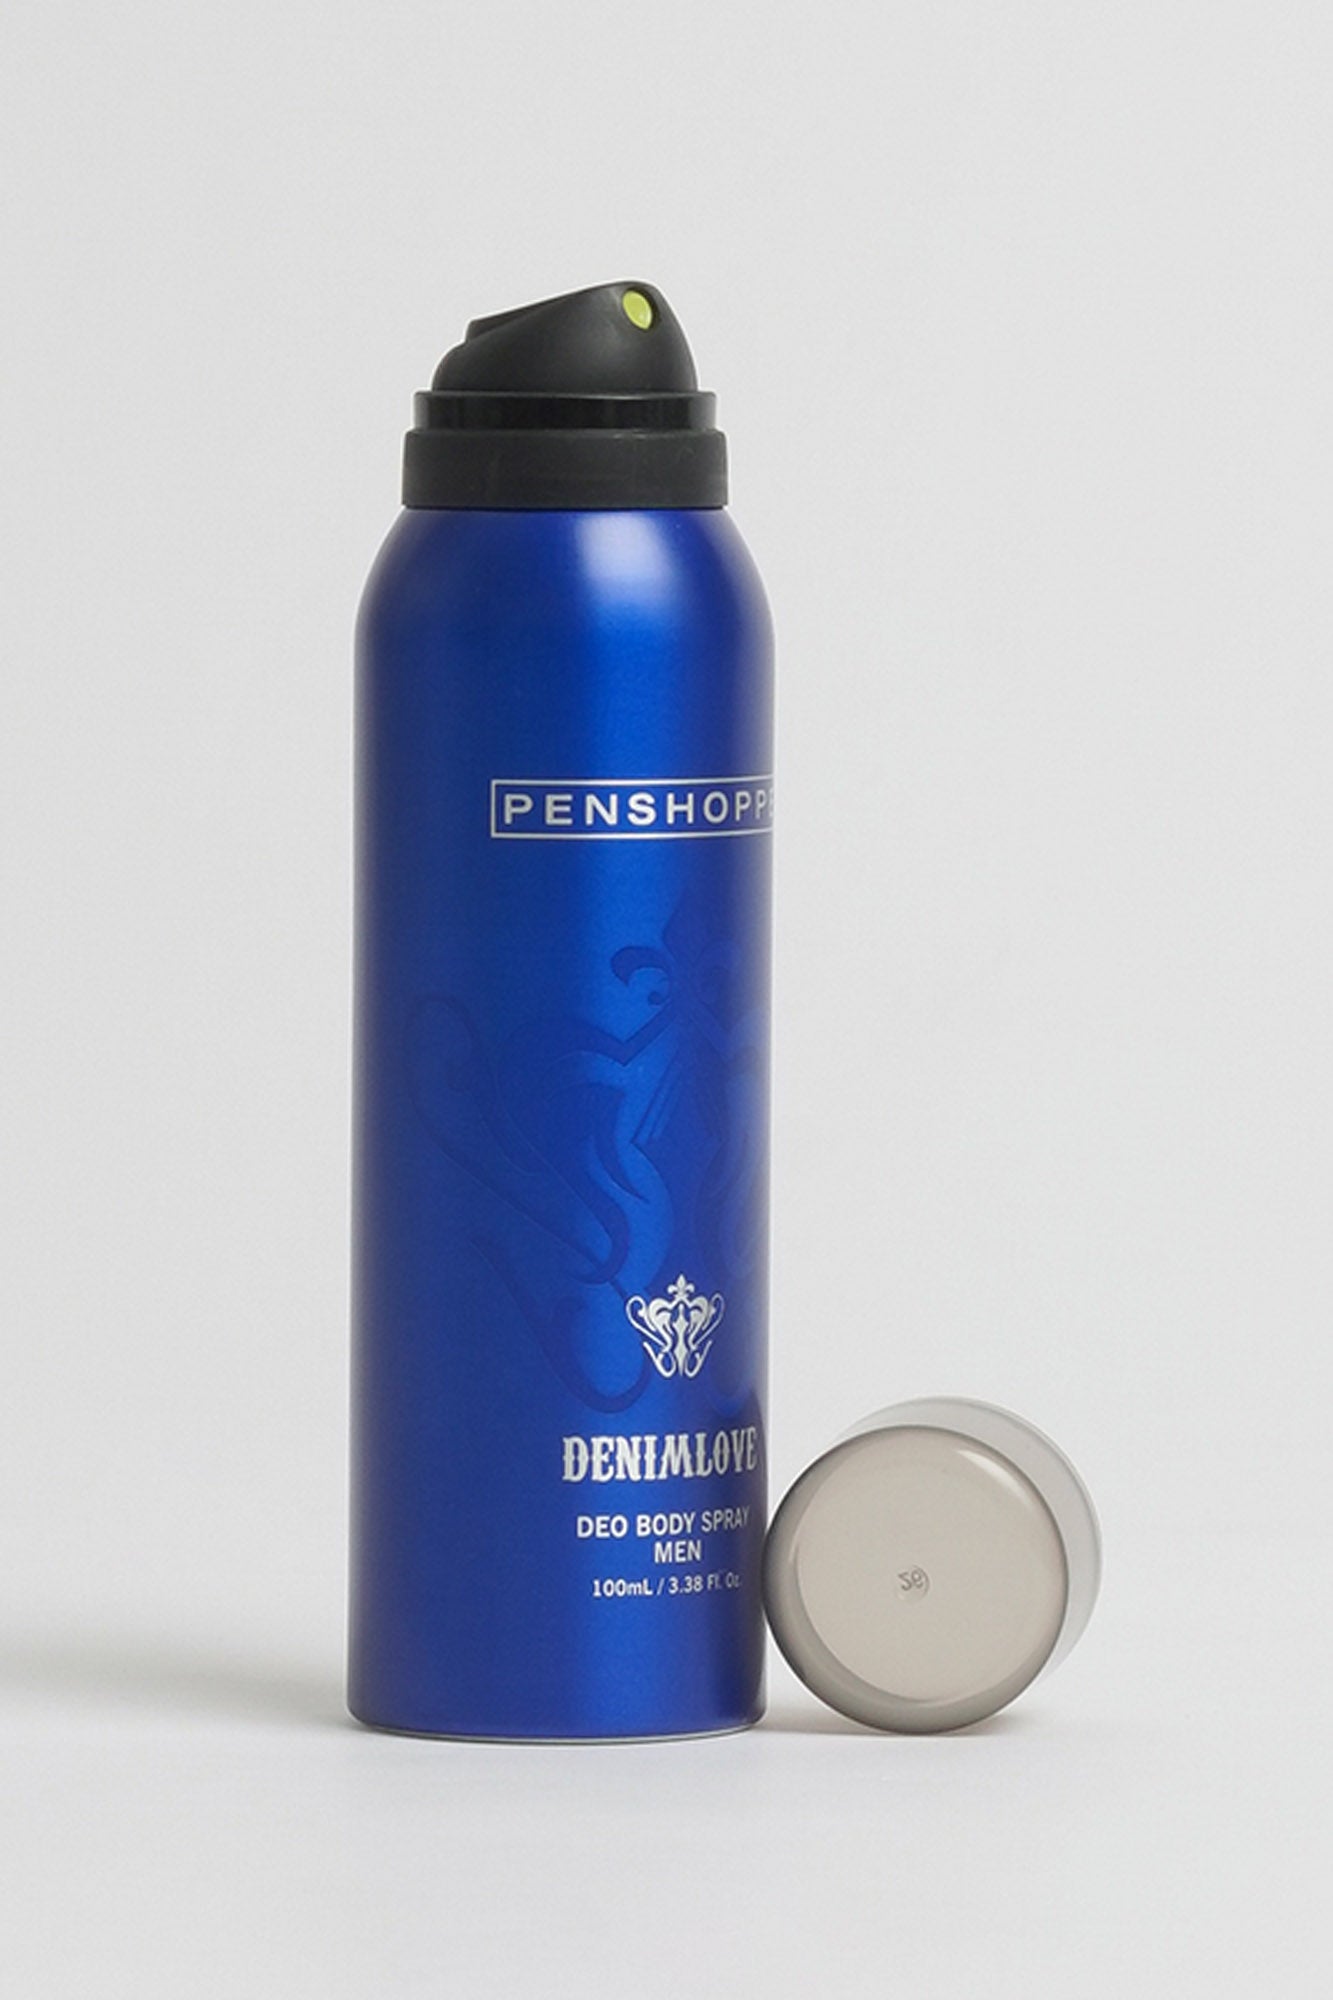 DENIM Deo BLACK Body Spray 150ml Deodorant Spray - For Men (300 ml, Pack of  2) | eBay